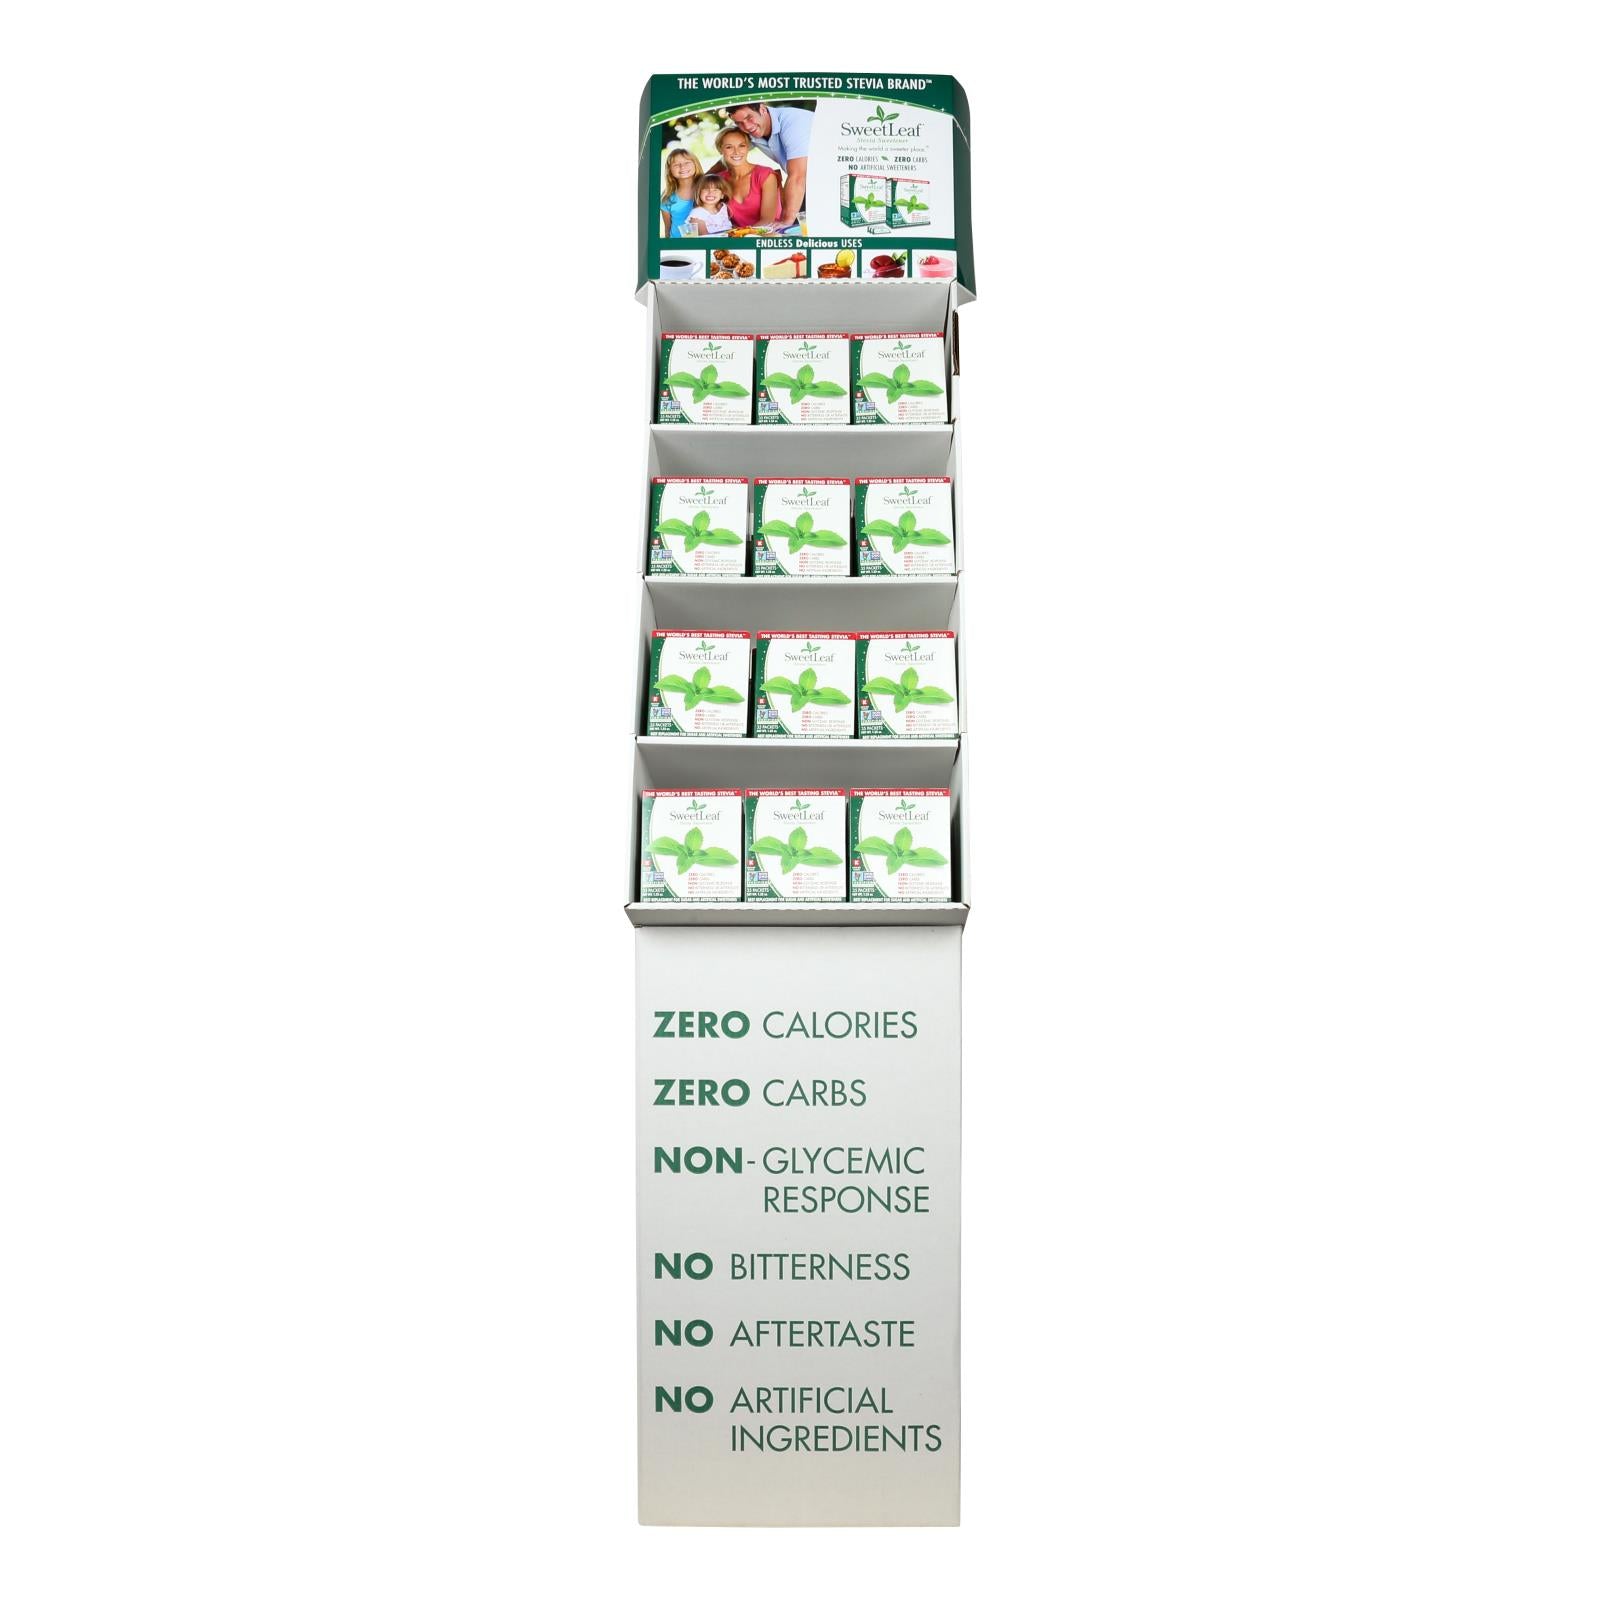 Sweet Leaf - Display Stevia Plus Packets - Case of 48 - 35 CT